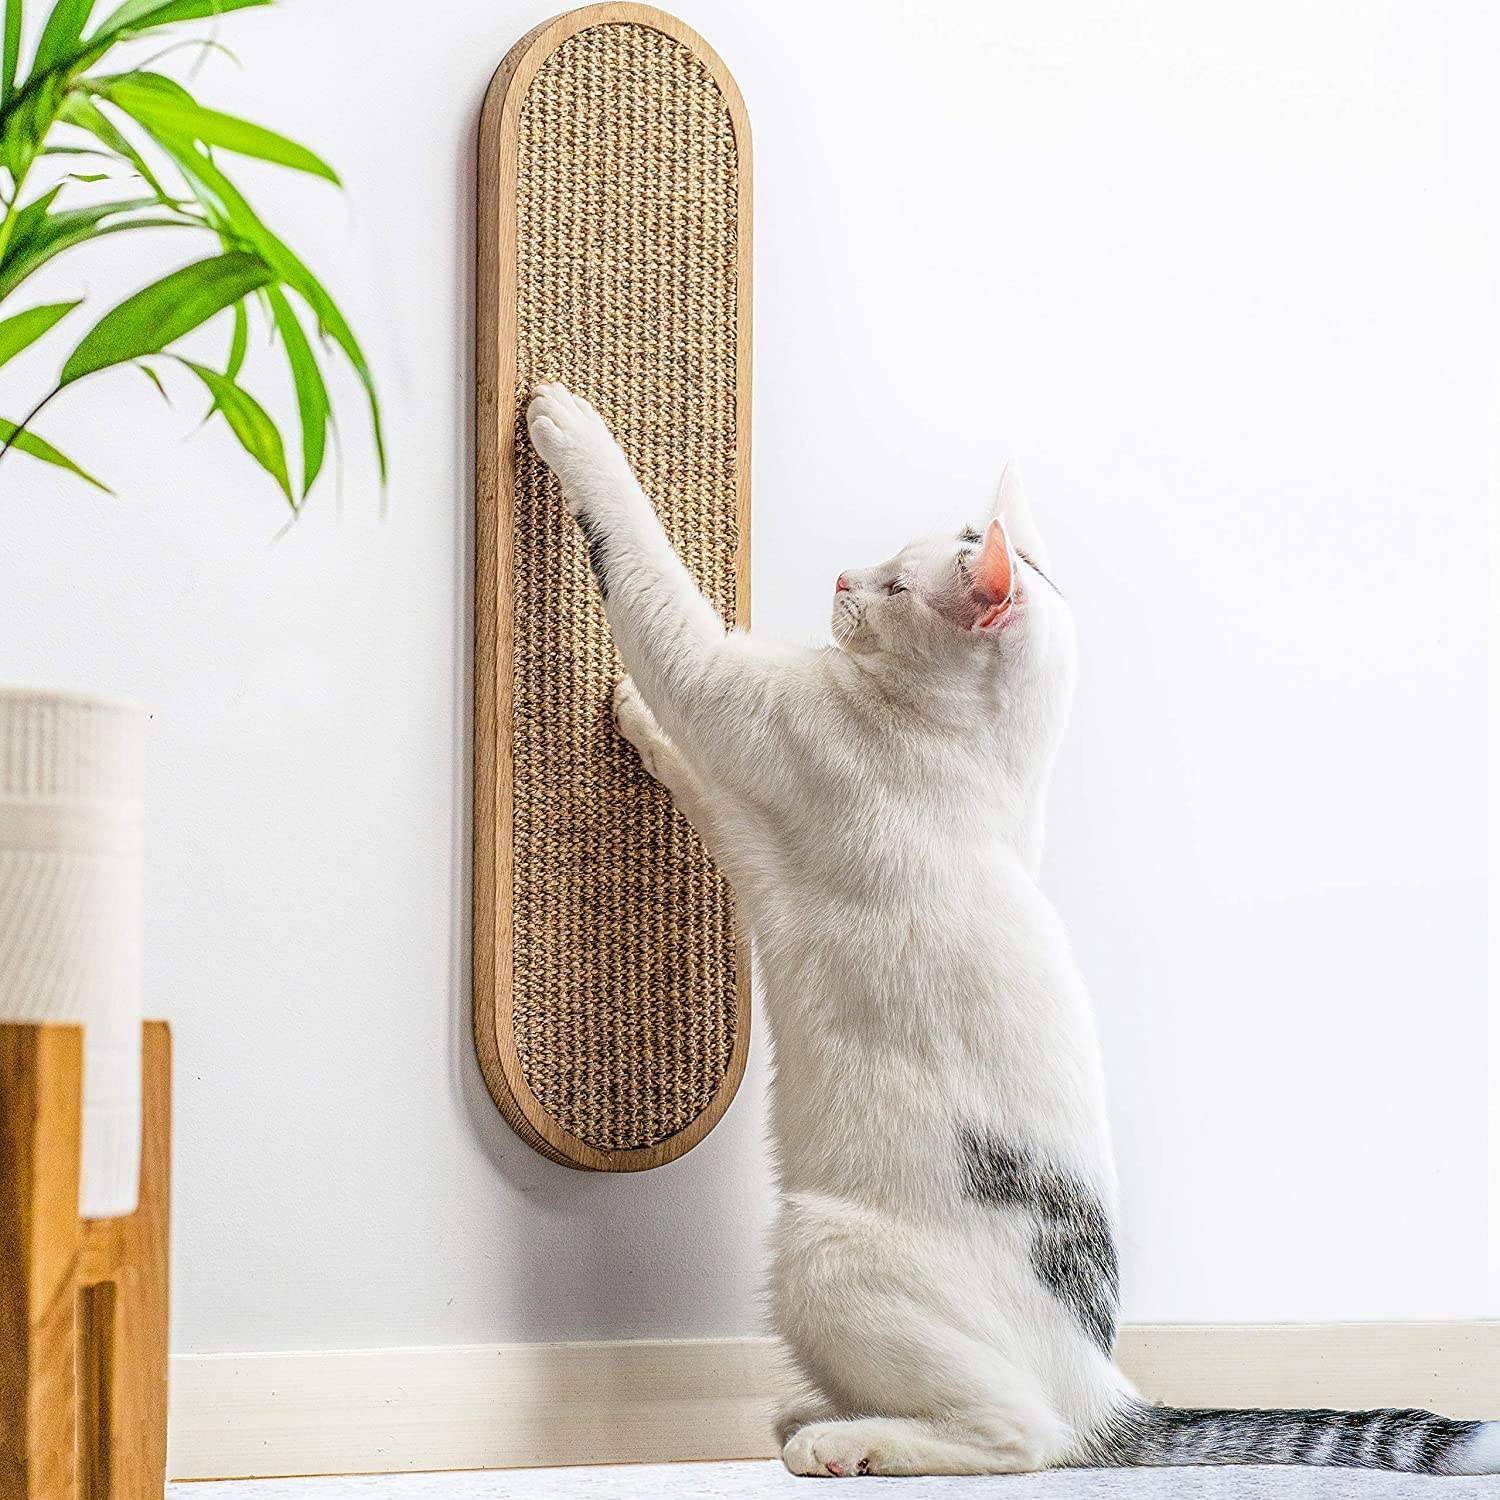 Как приучить котенка к когтеточке в квартире - быстро и легко - kupipet.ru